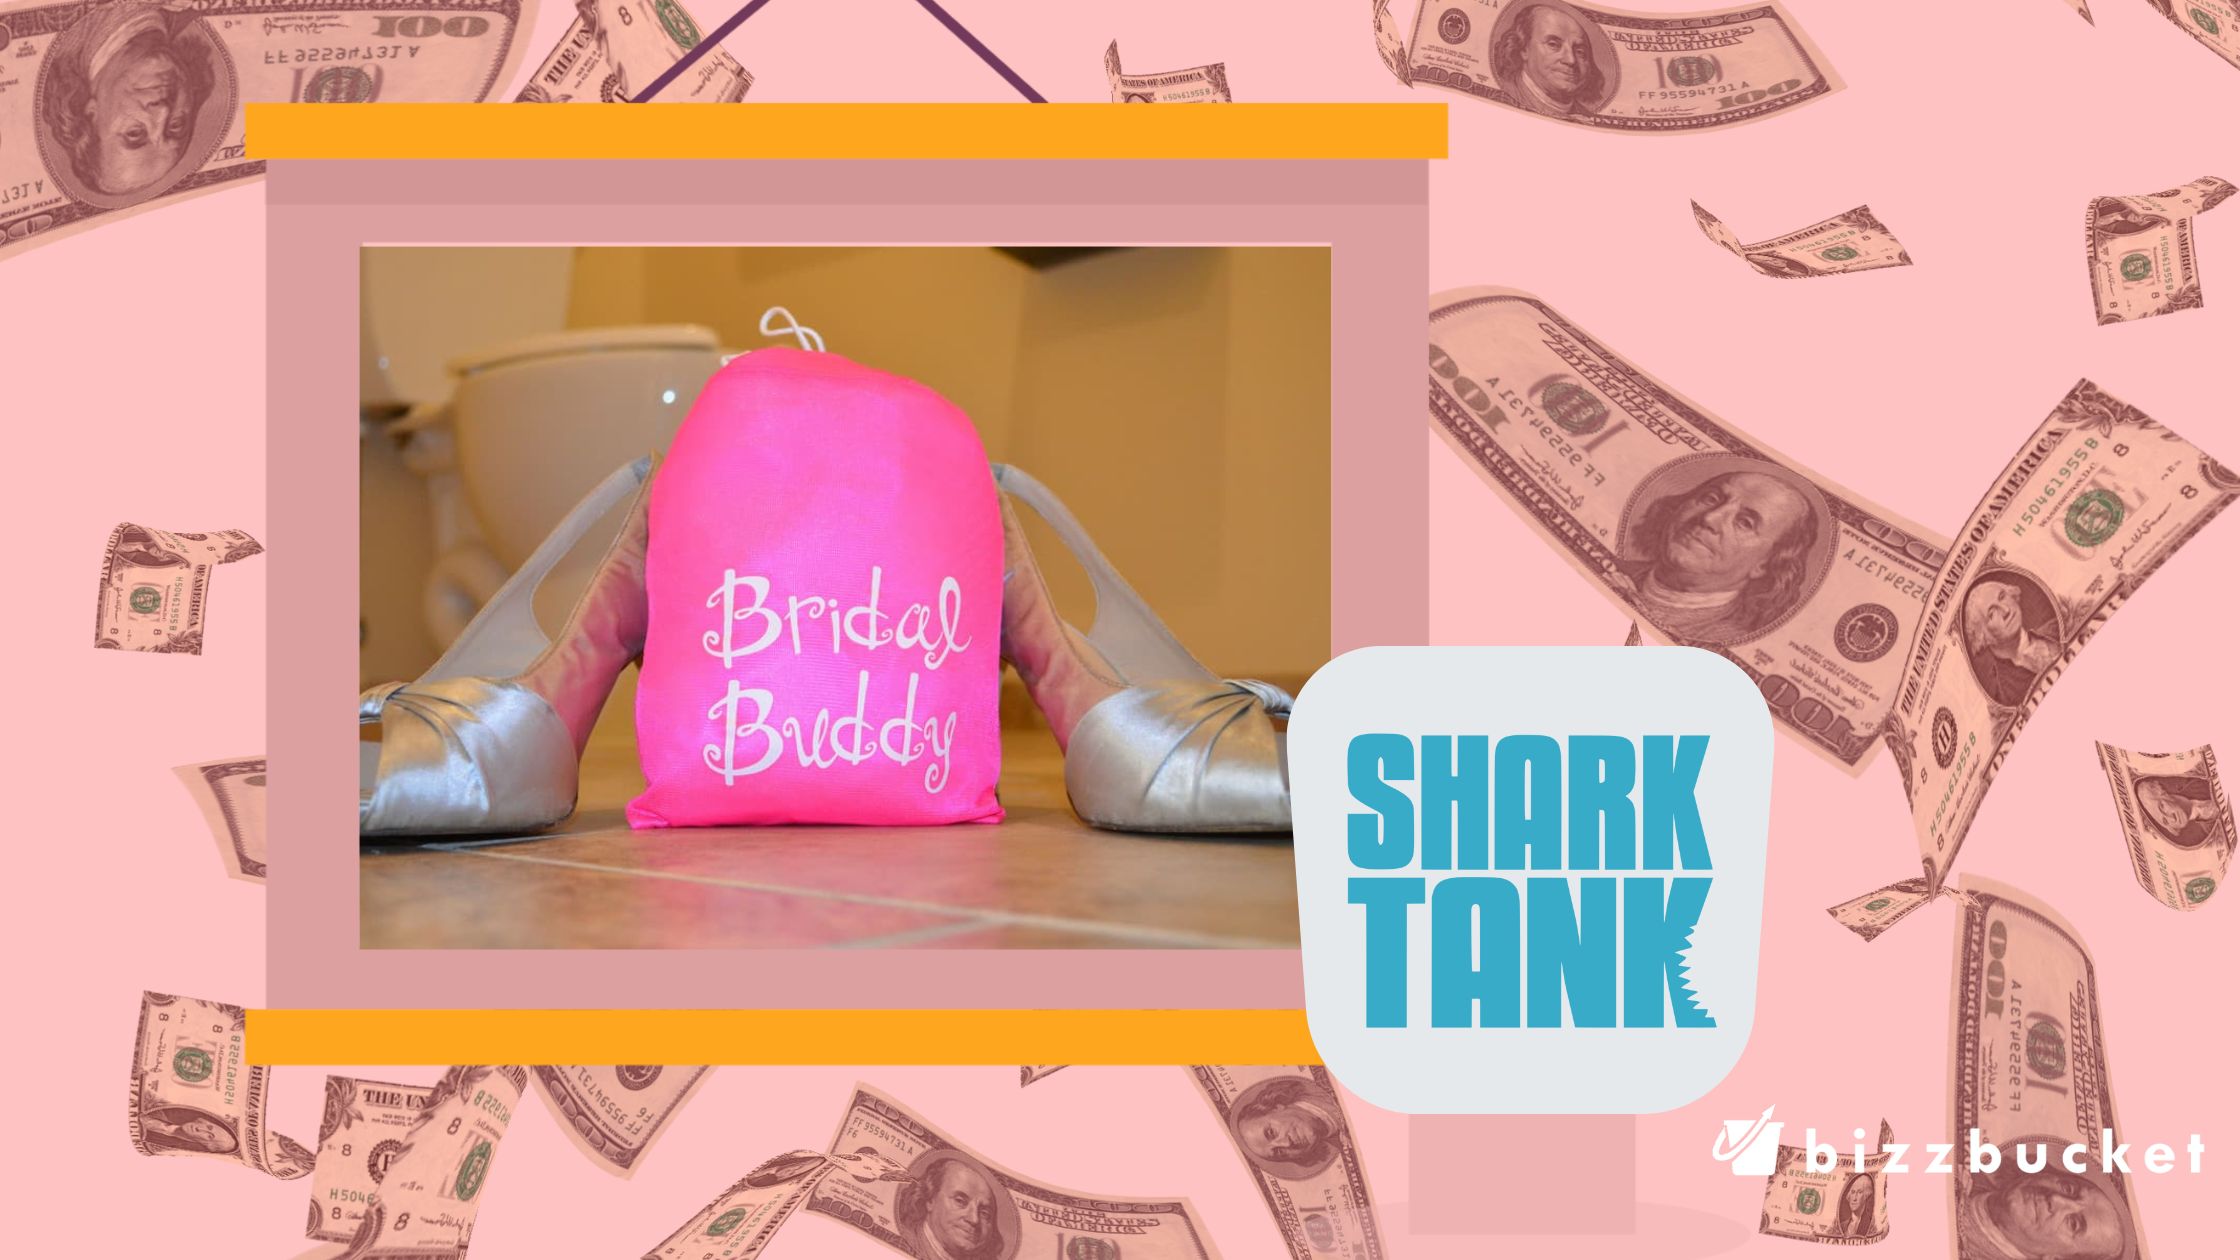 Bridal Buddy shark tank update